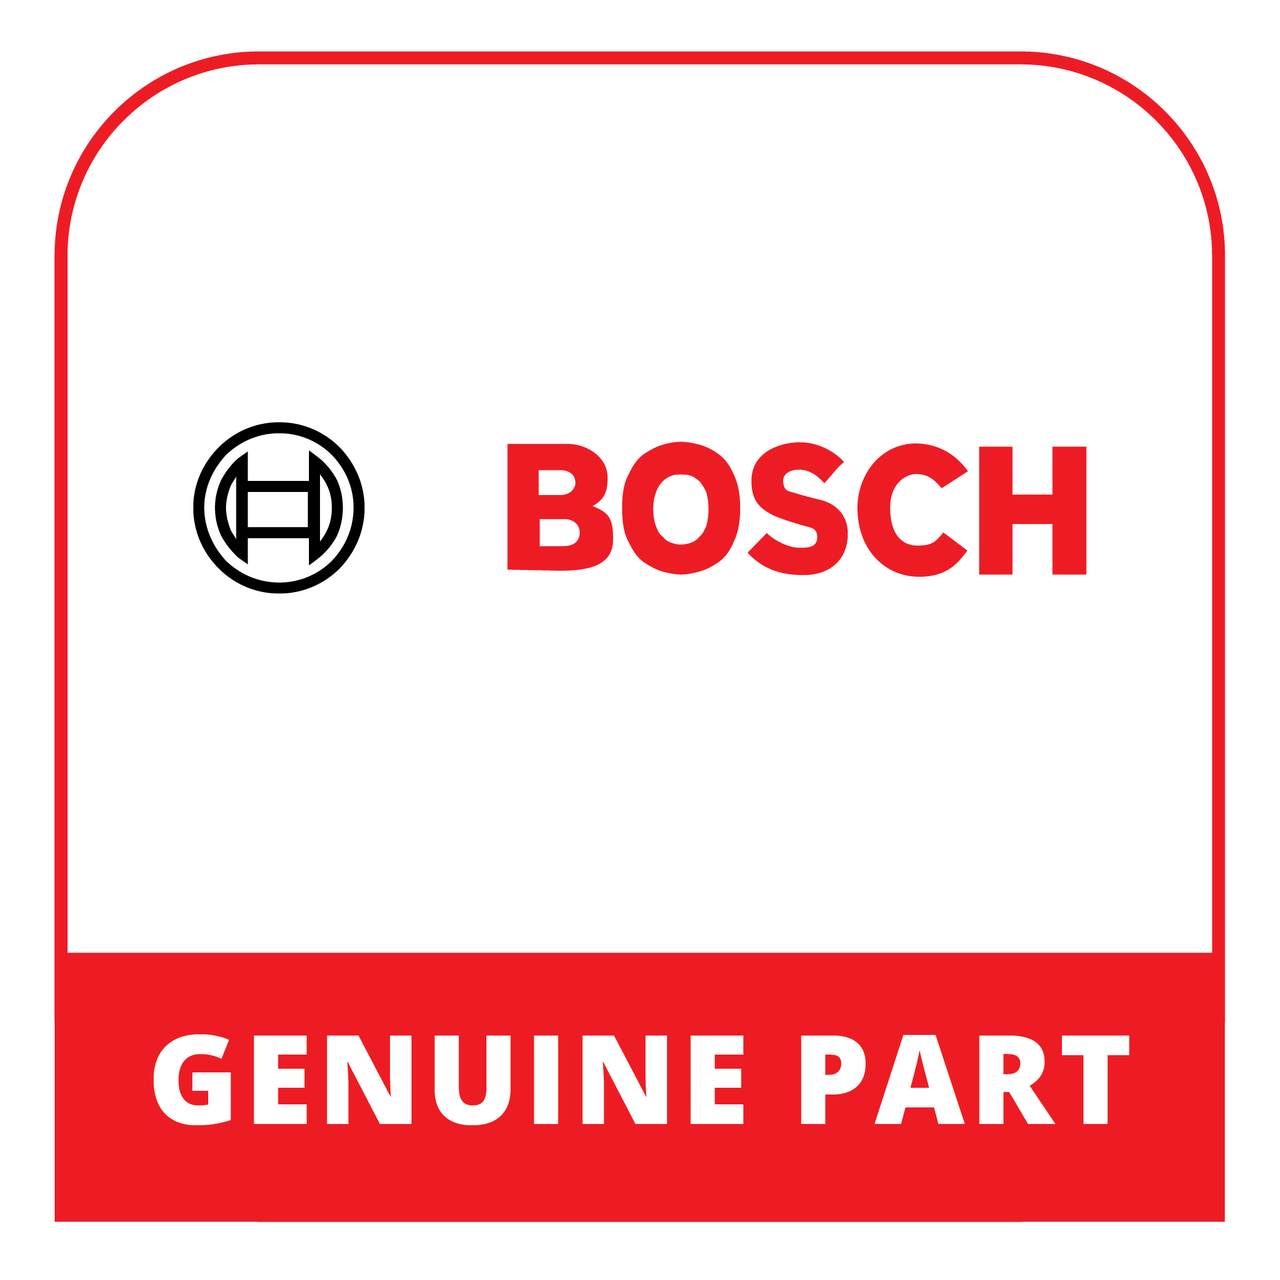 Bosch (Thermador) 23000858 - Door-Outer - Genuine Bosch (Thermador) Part